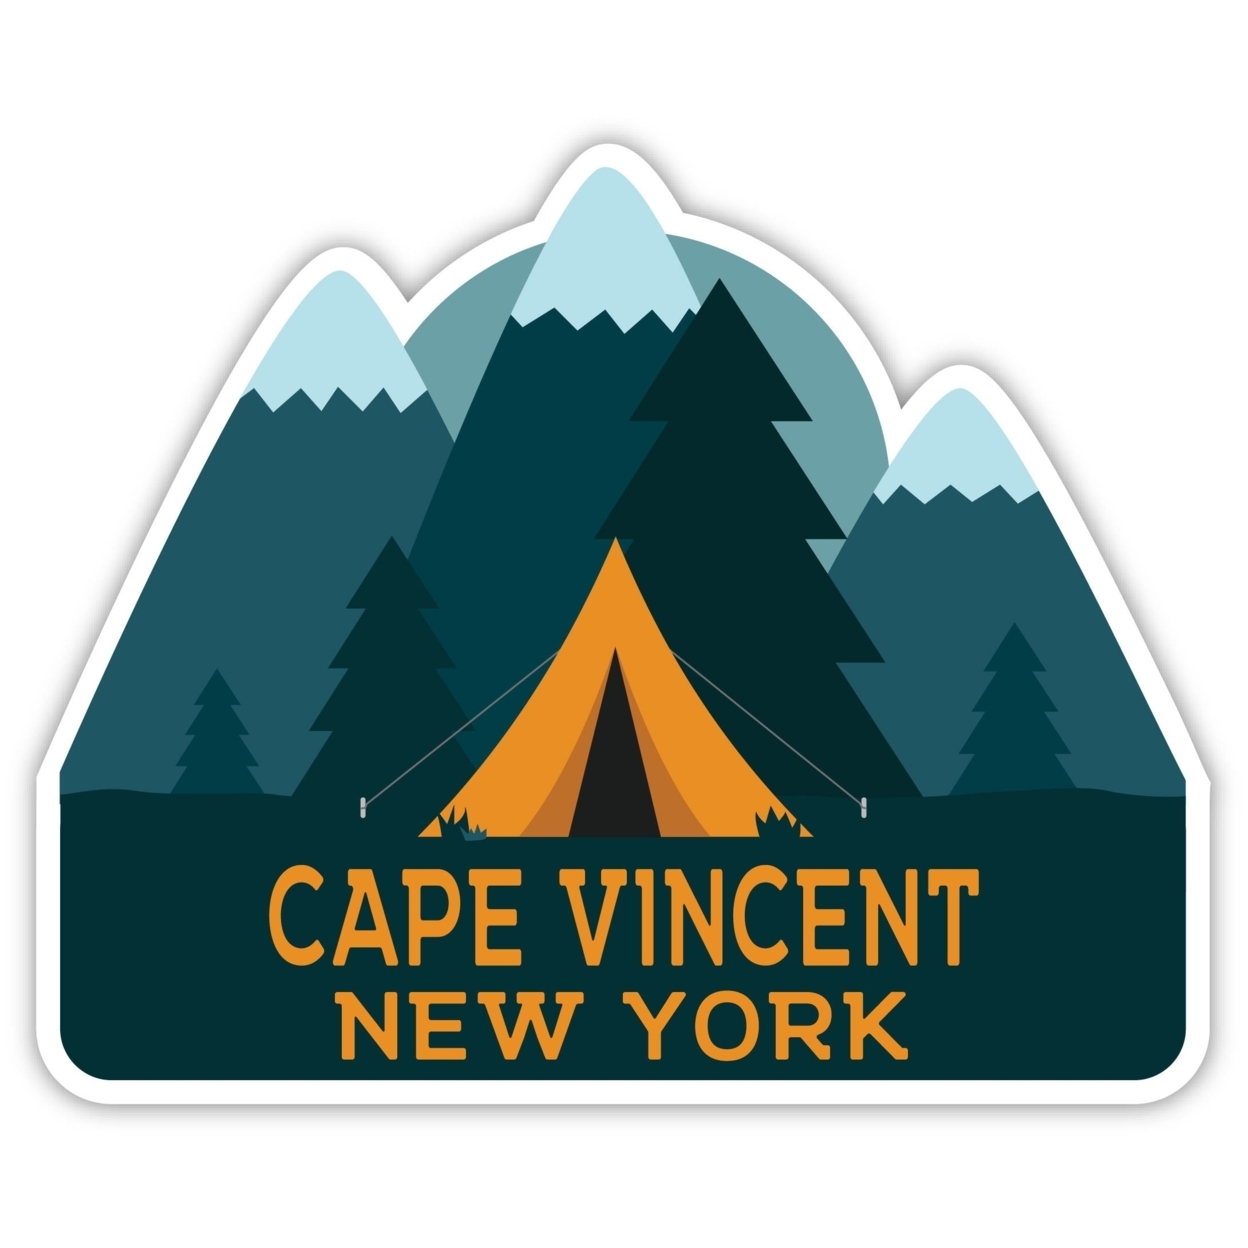 Cape Vincent New York Souvenir Decorative Stickers (Choose Theme And Size) - 4-Pack, 12-Inch, Tent